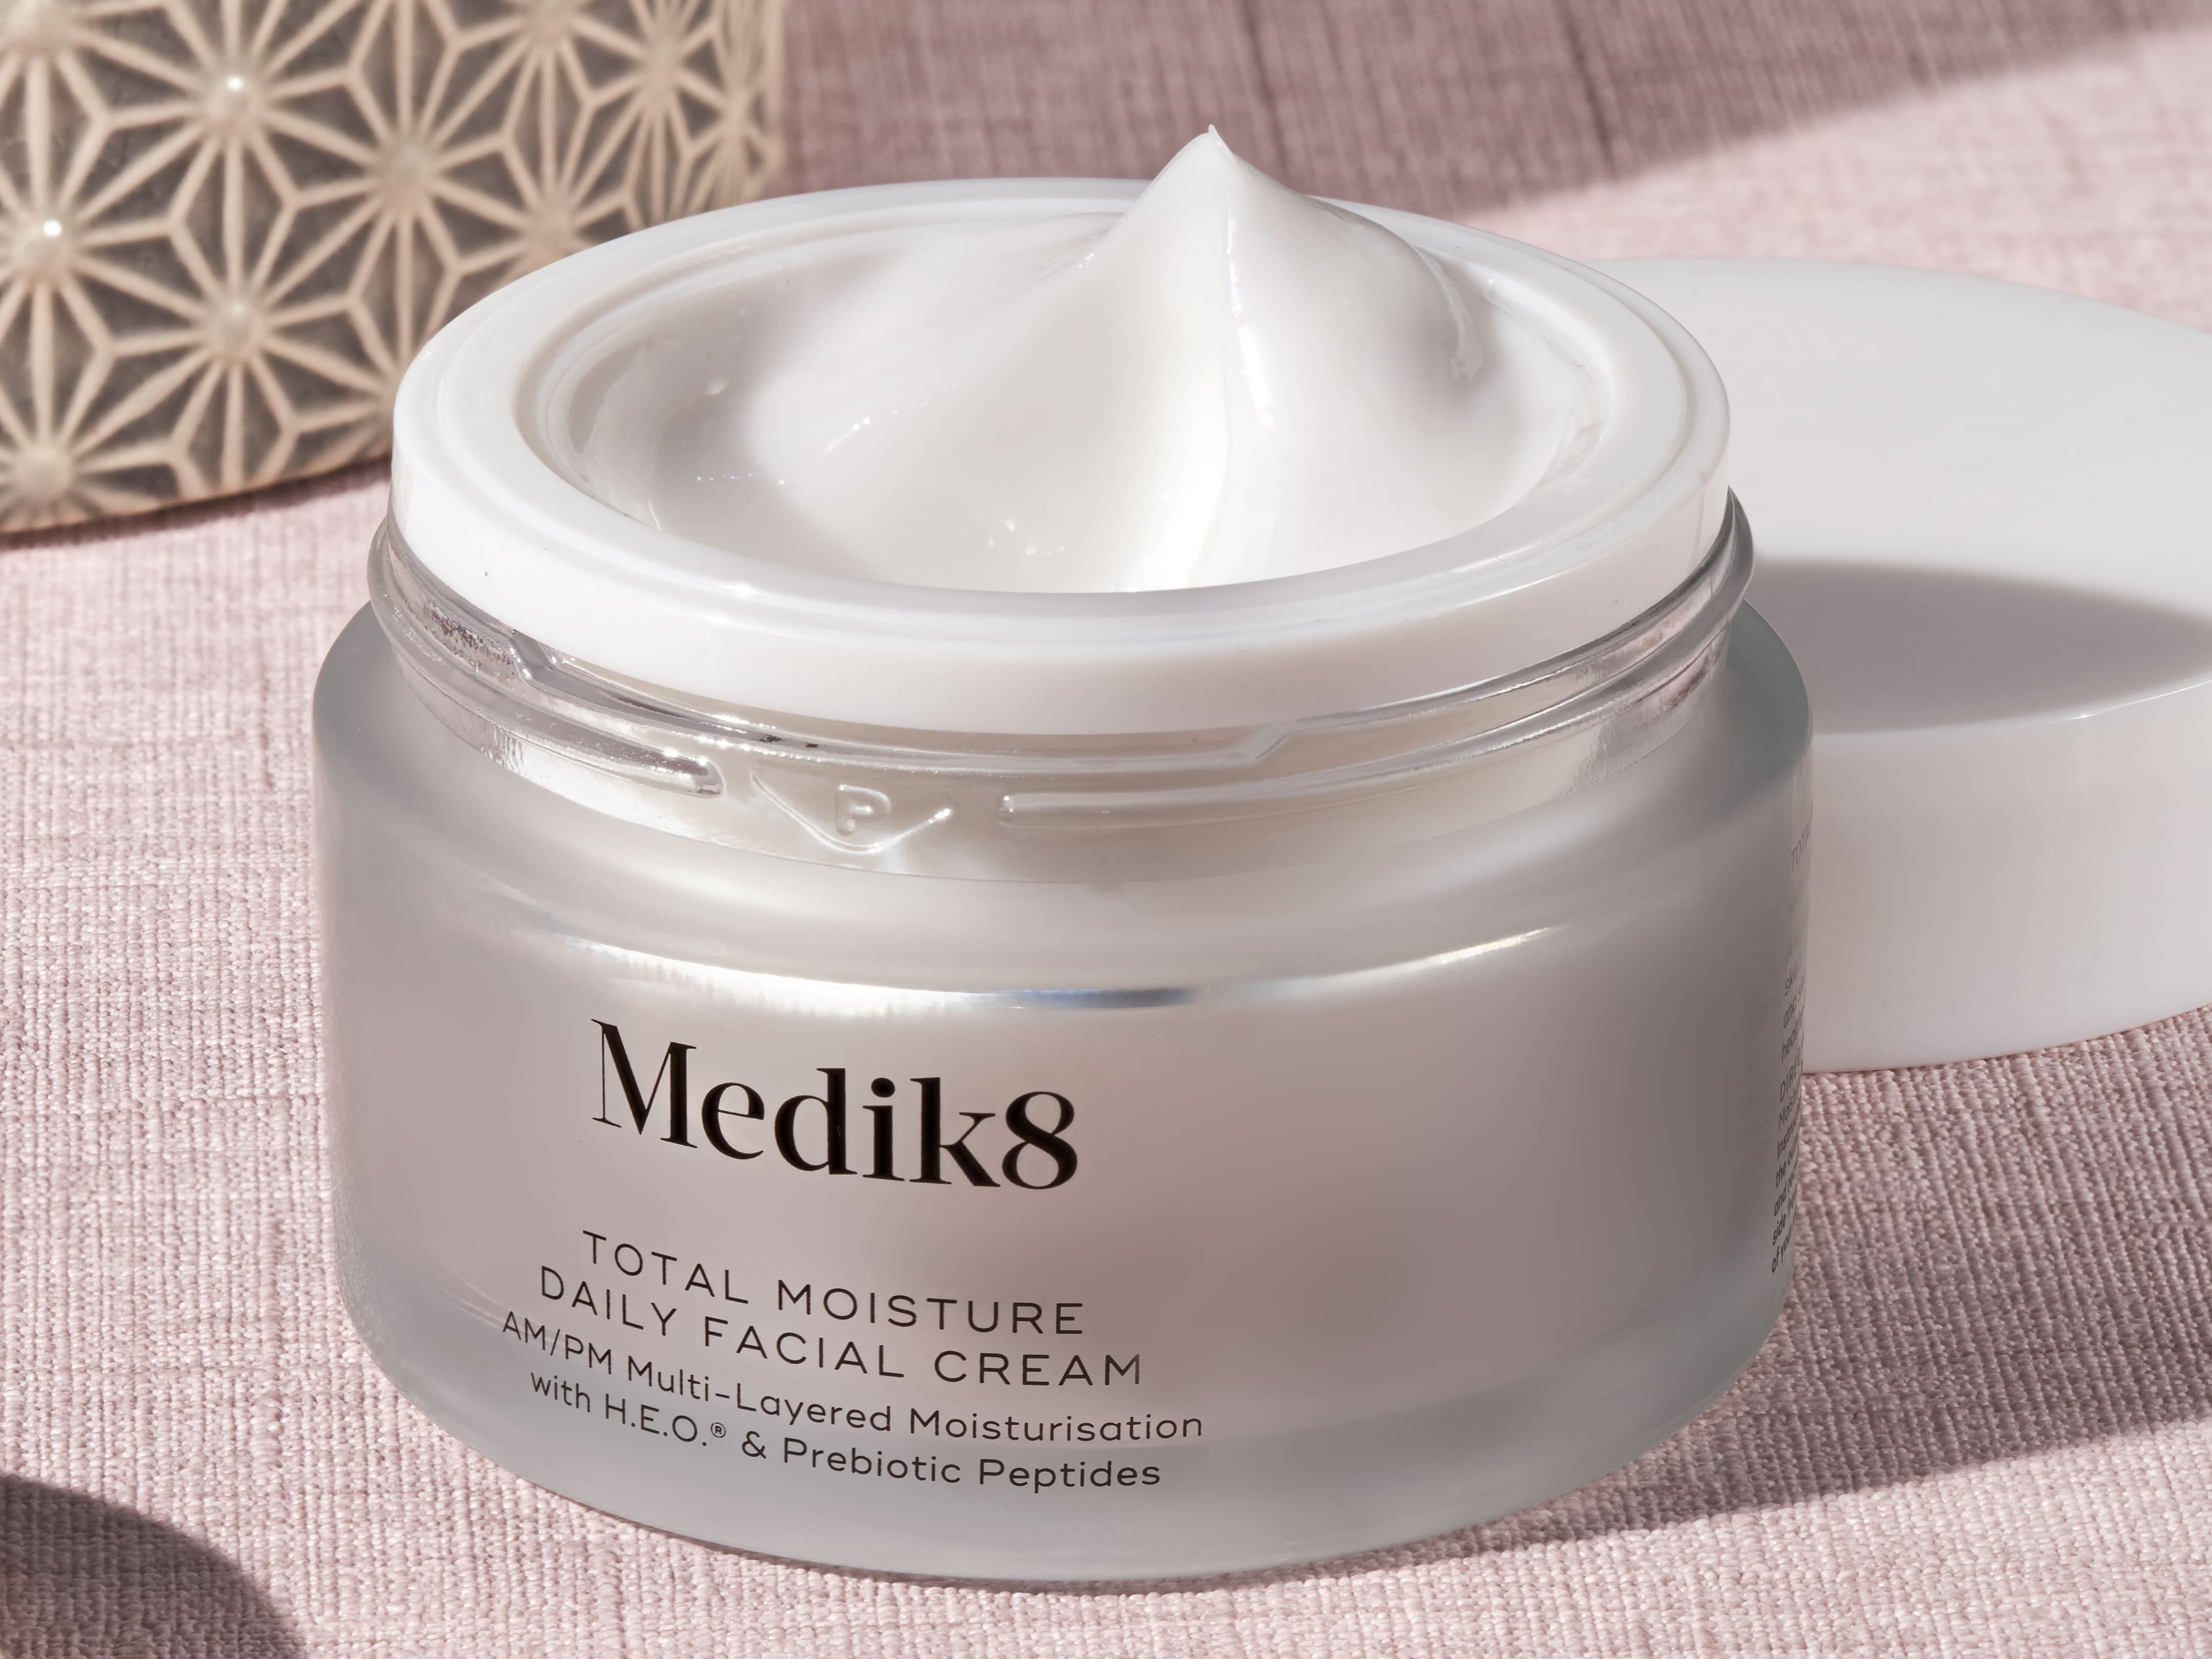 Medik8 Total Moisture Facial Cream review | Space NK